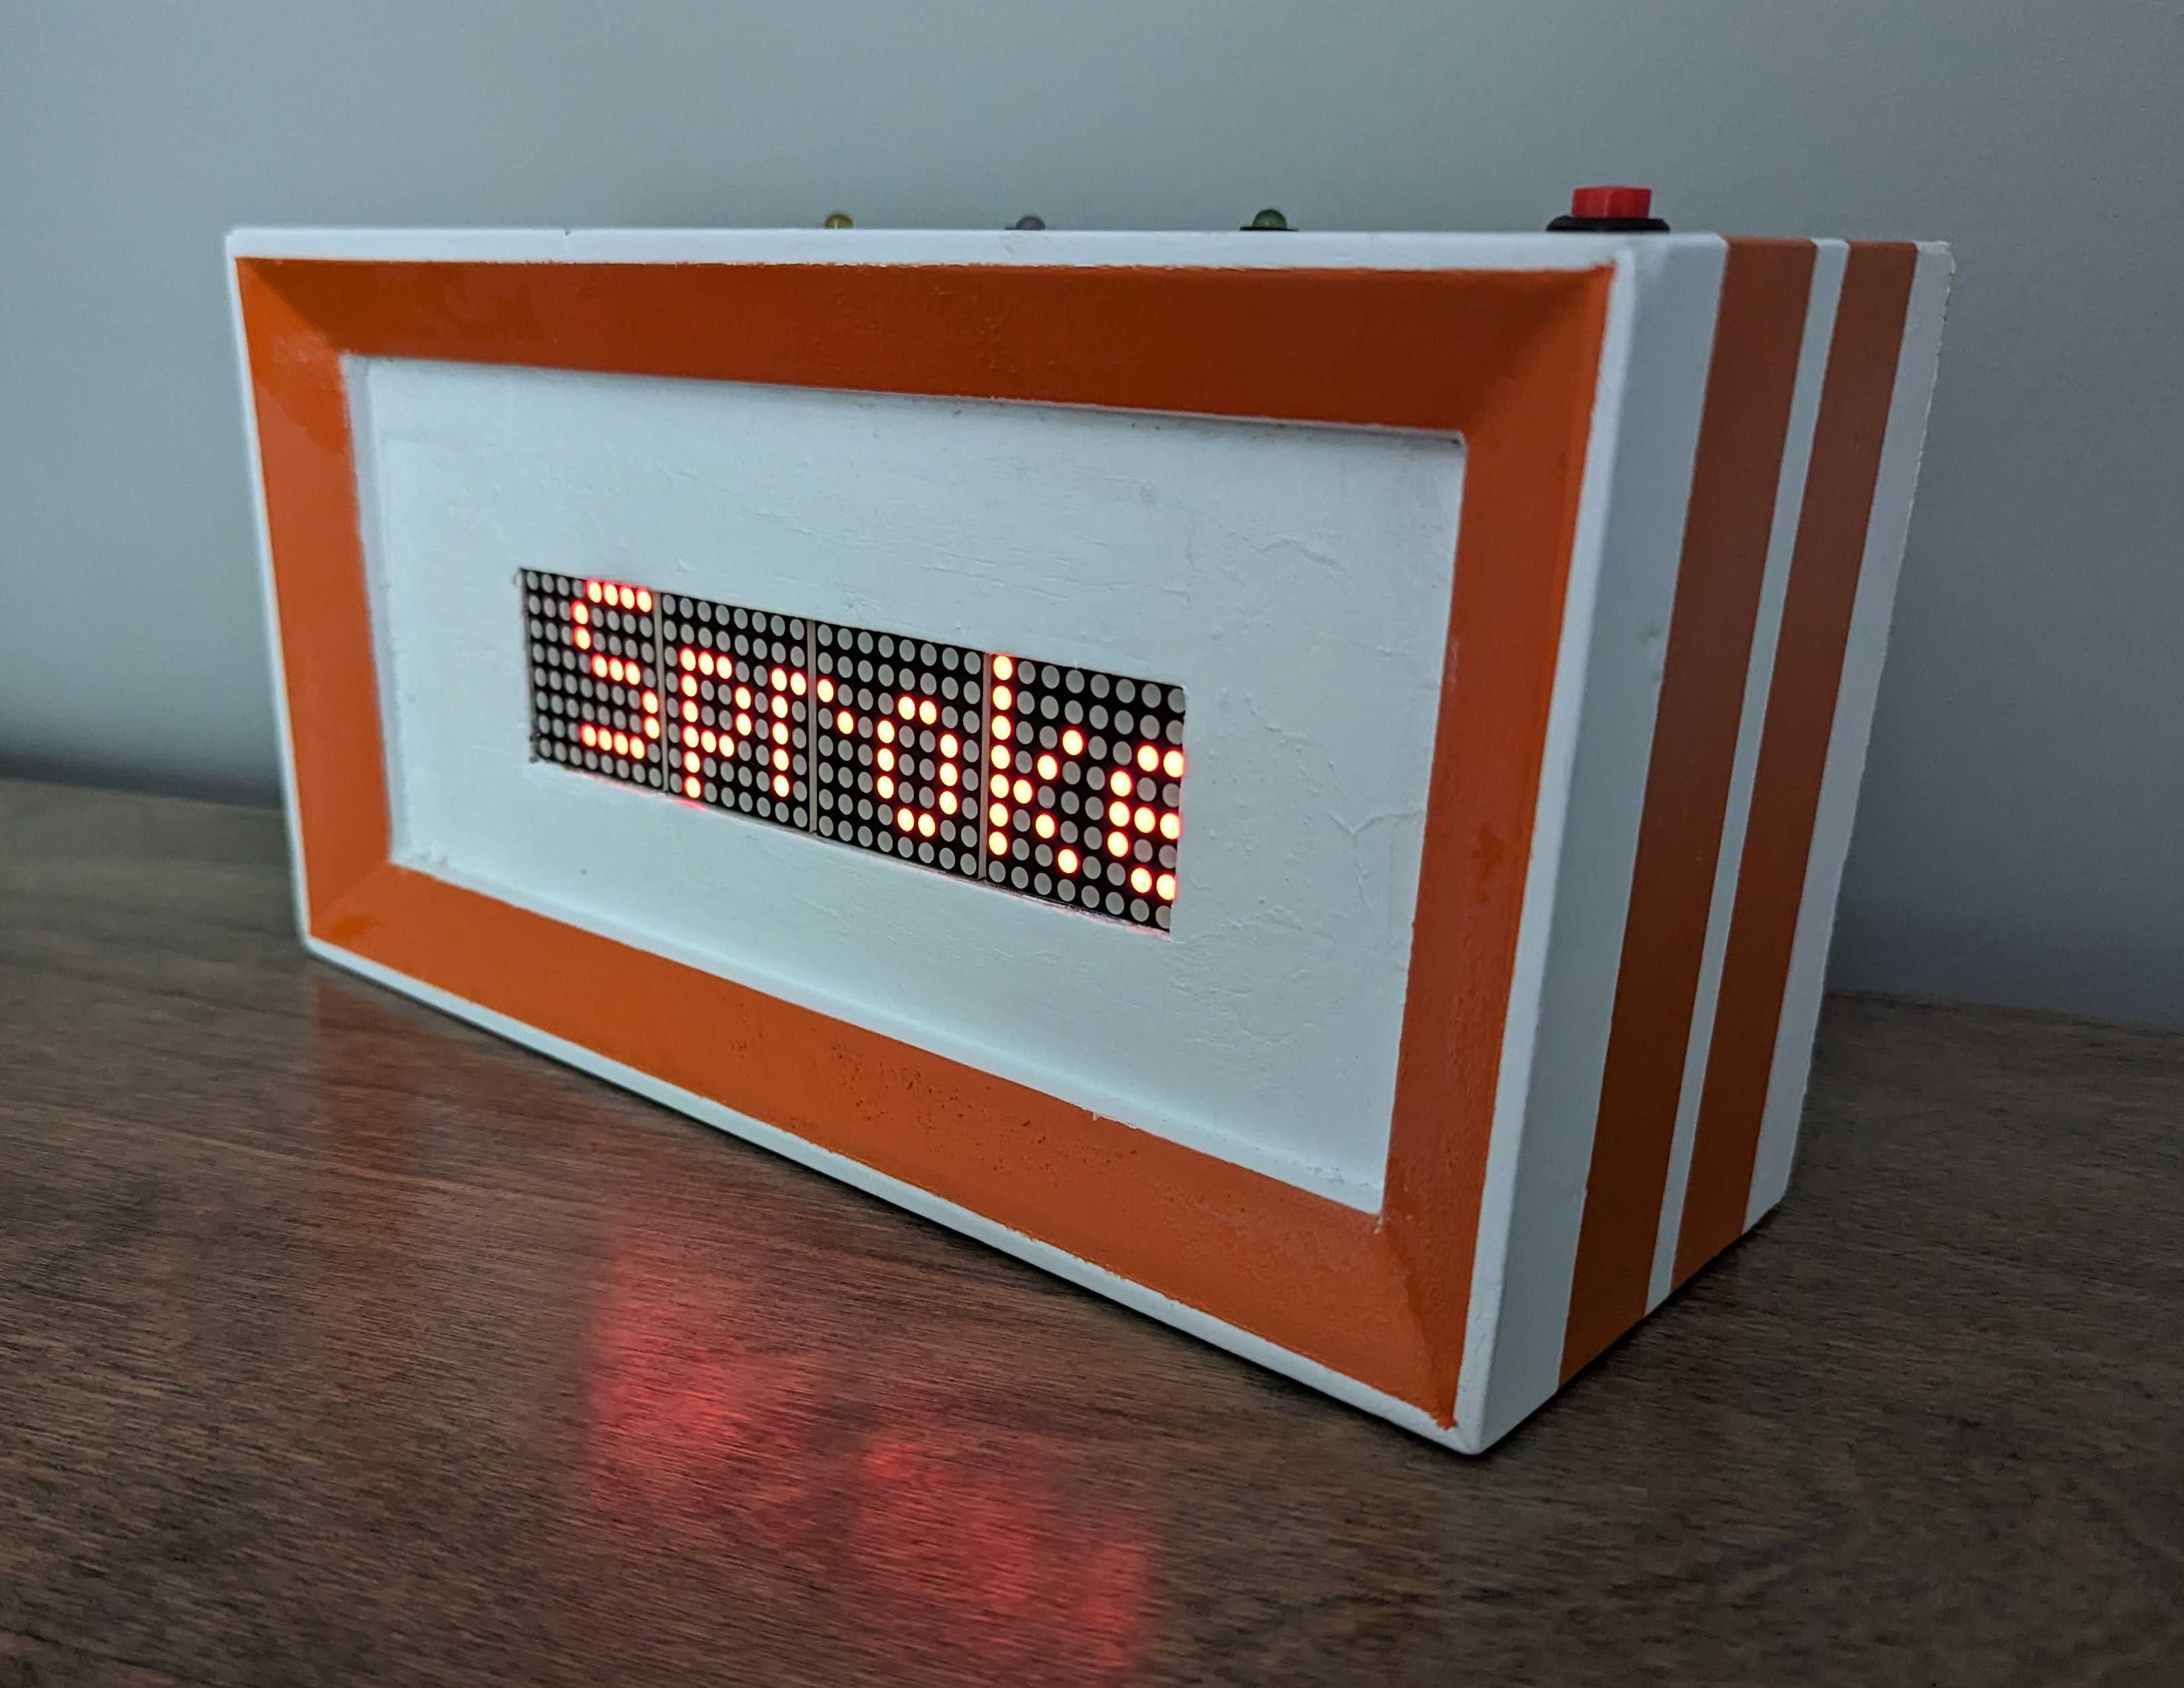 Introducing the Sproket Logic Scrolling Display Box (Orange Stripe Edition)